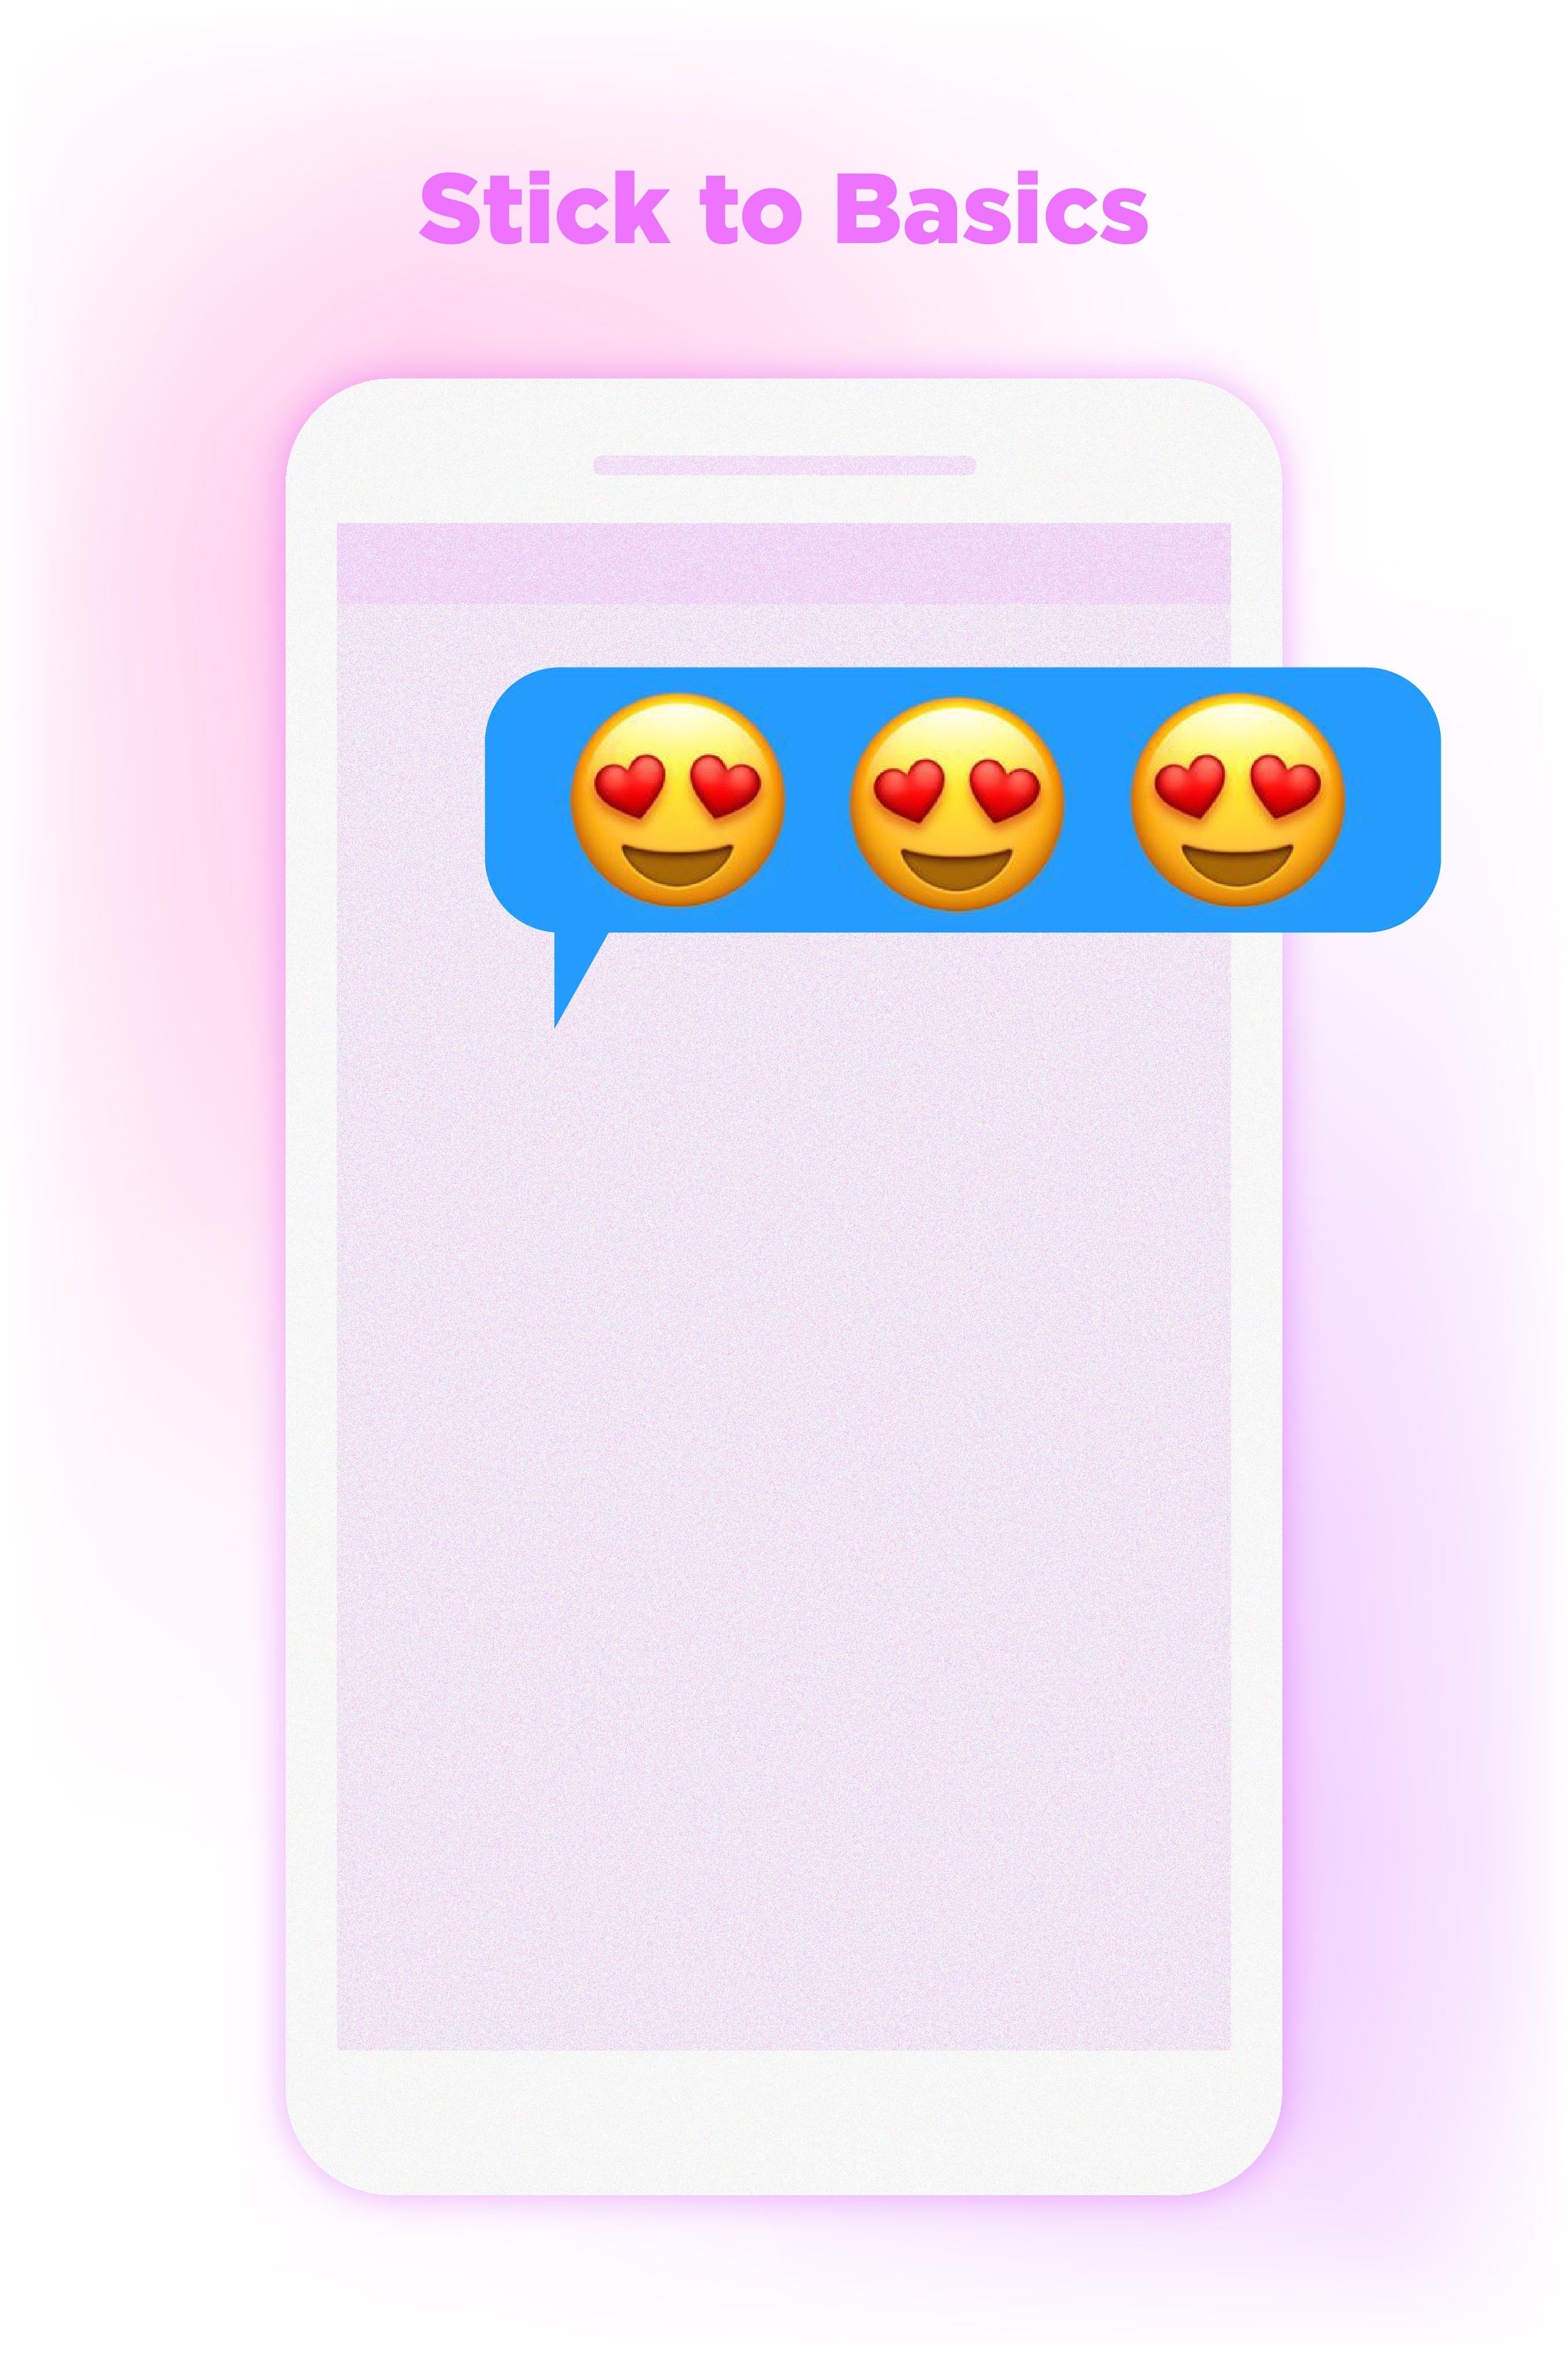 How to Flirt with Emojis Like a Pro – Flirty Emoji Combinations